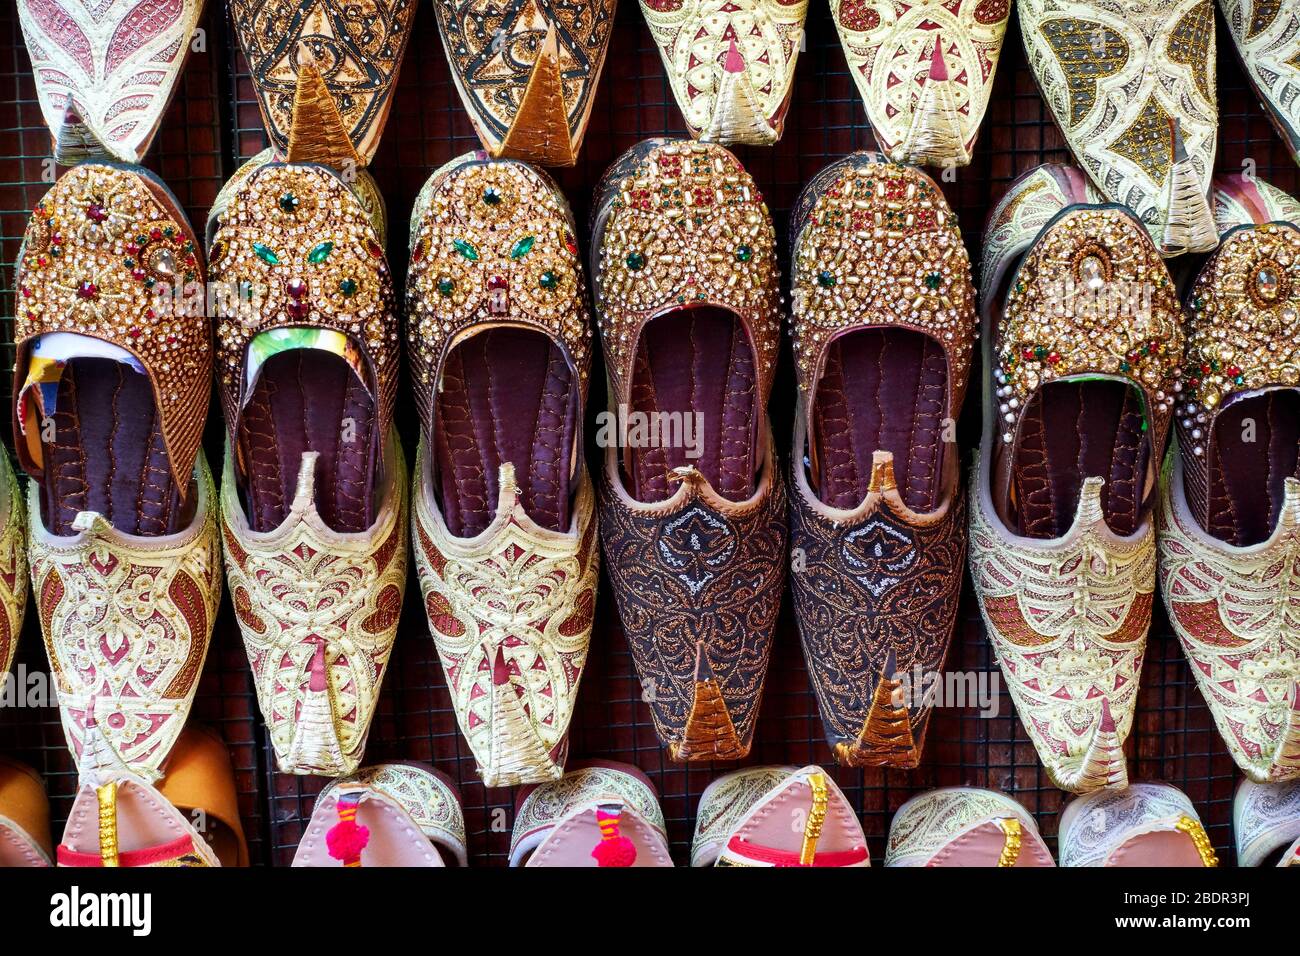 Arabian babouches shoes at market stall closeup Stock Photo